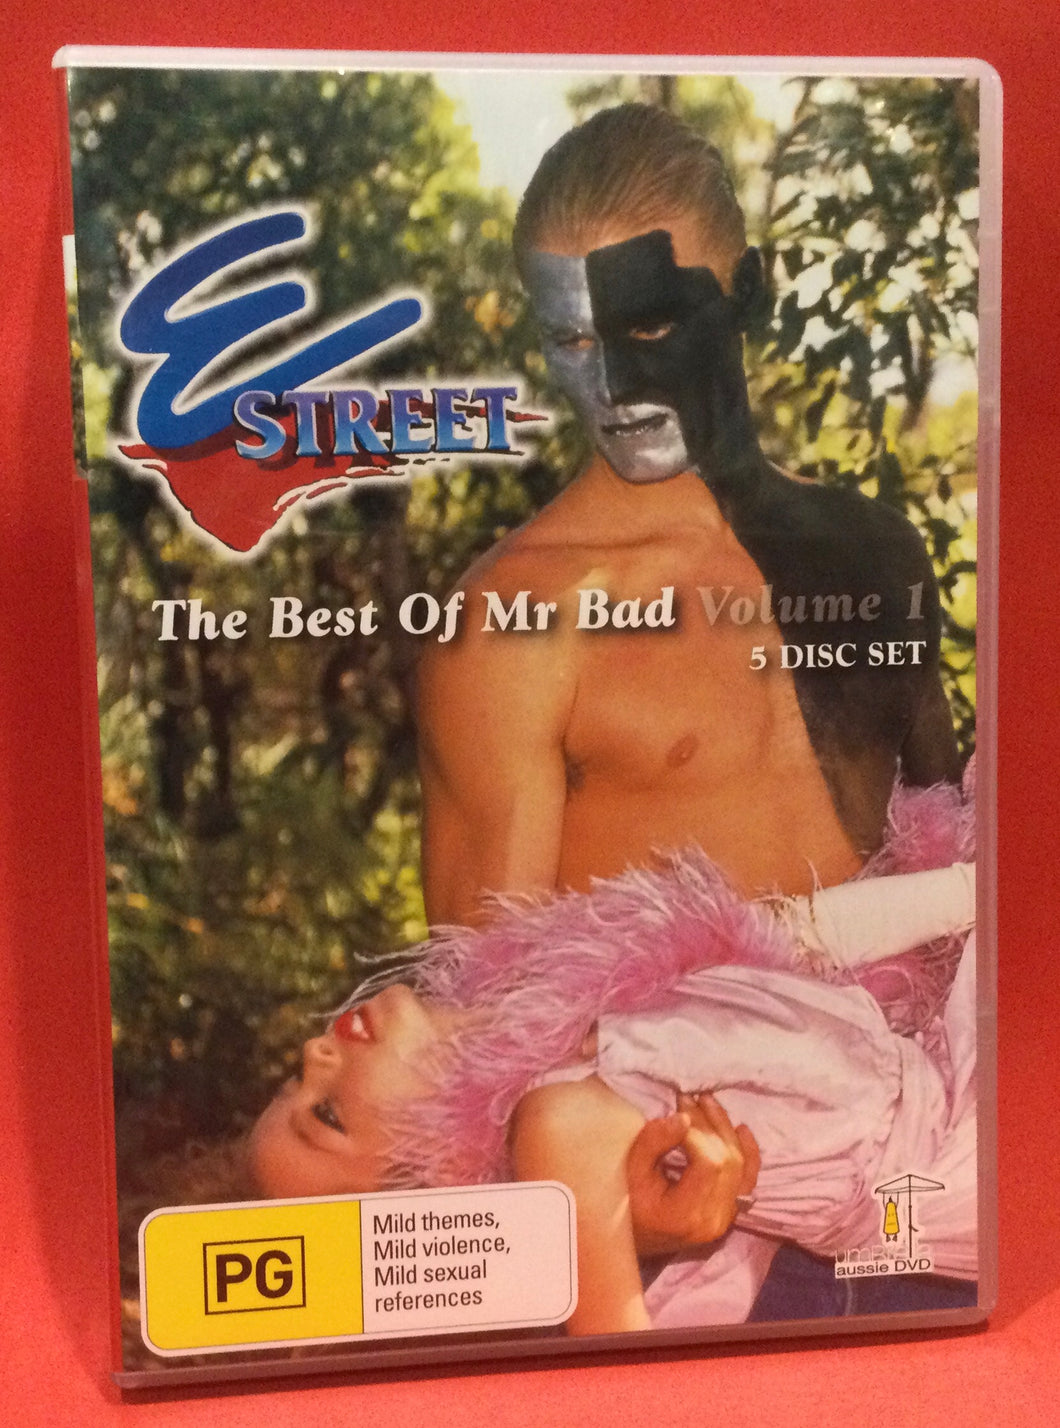 E STREET -- BEST OF MR BAD, THE - VOLUME 1 - 5 DVD DISCS (USED)